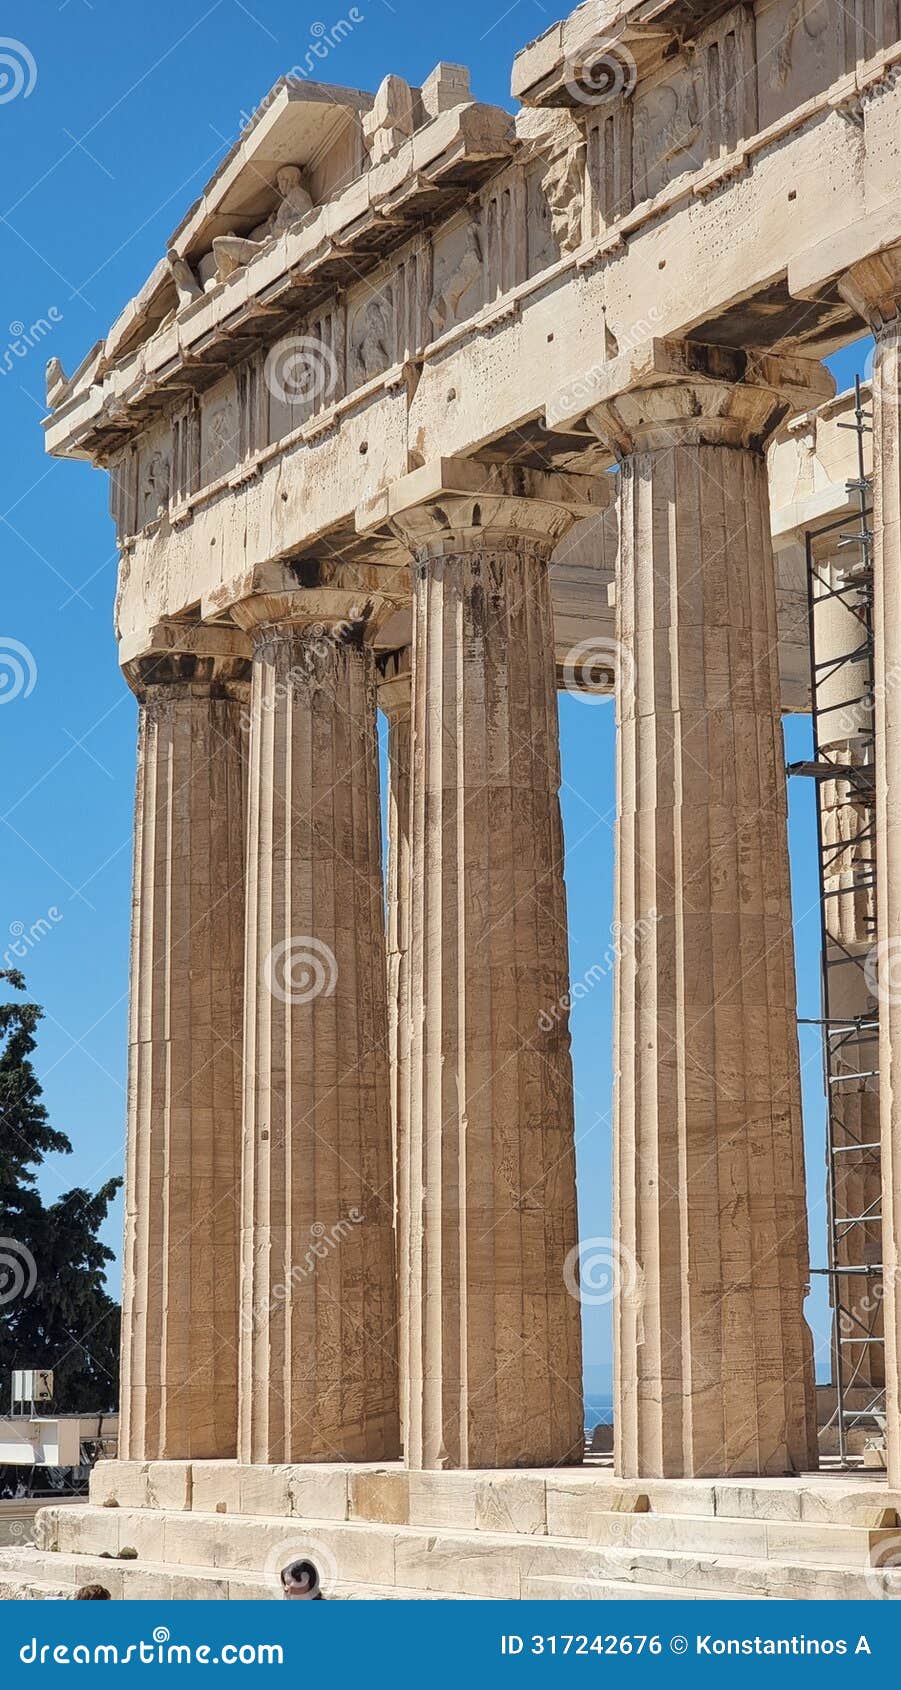 parthenon athens greece touristic attracion in europe